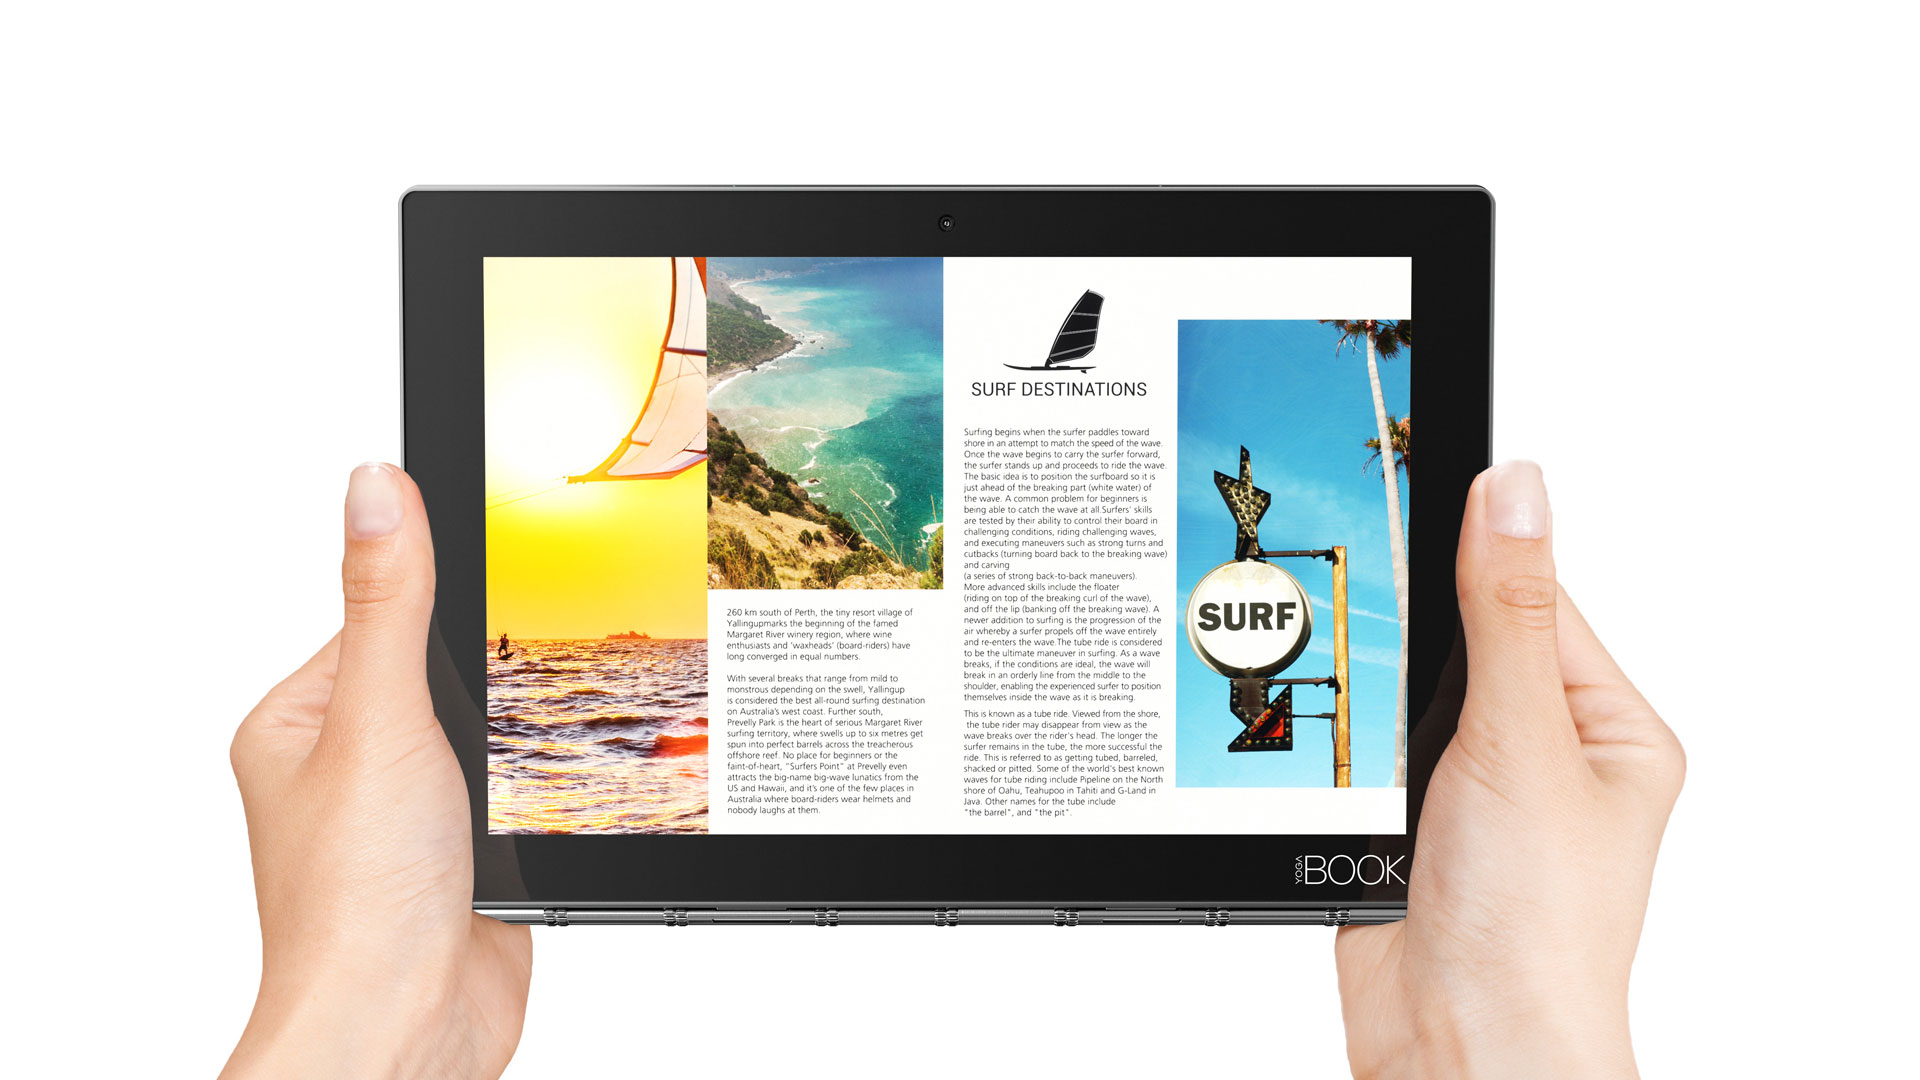 Lenovo Yoga Book YB1-X90L mit Android 6.0 im Test - notebooksbilliger